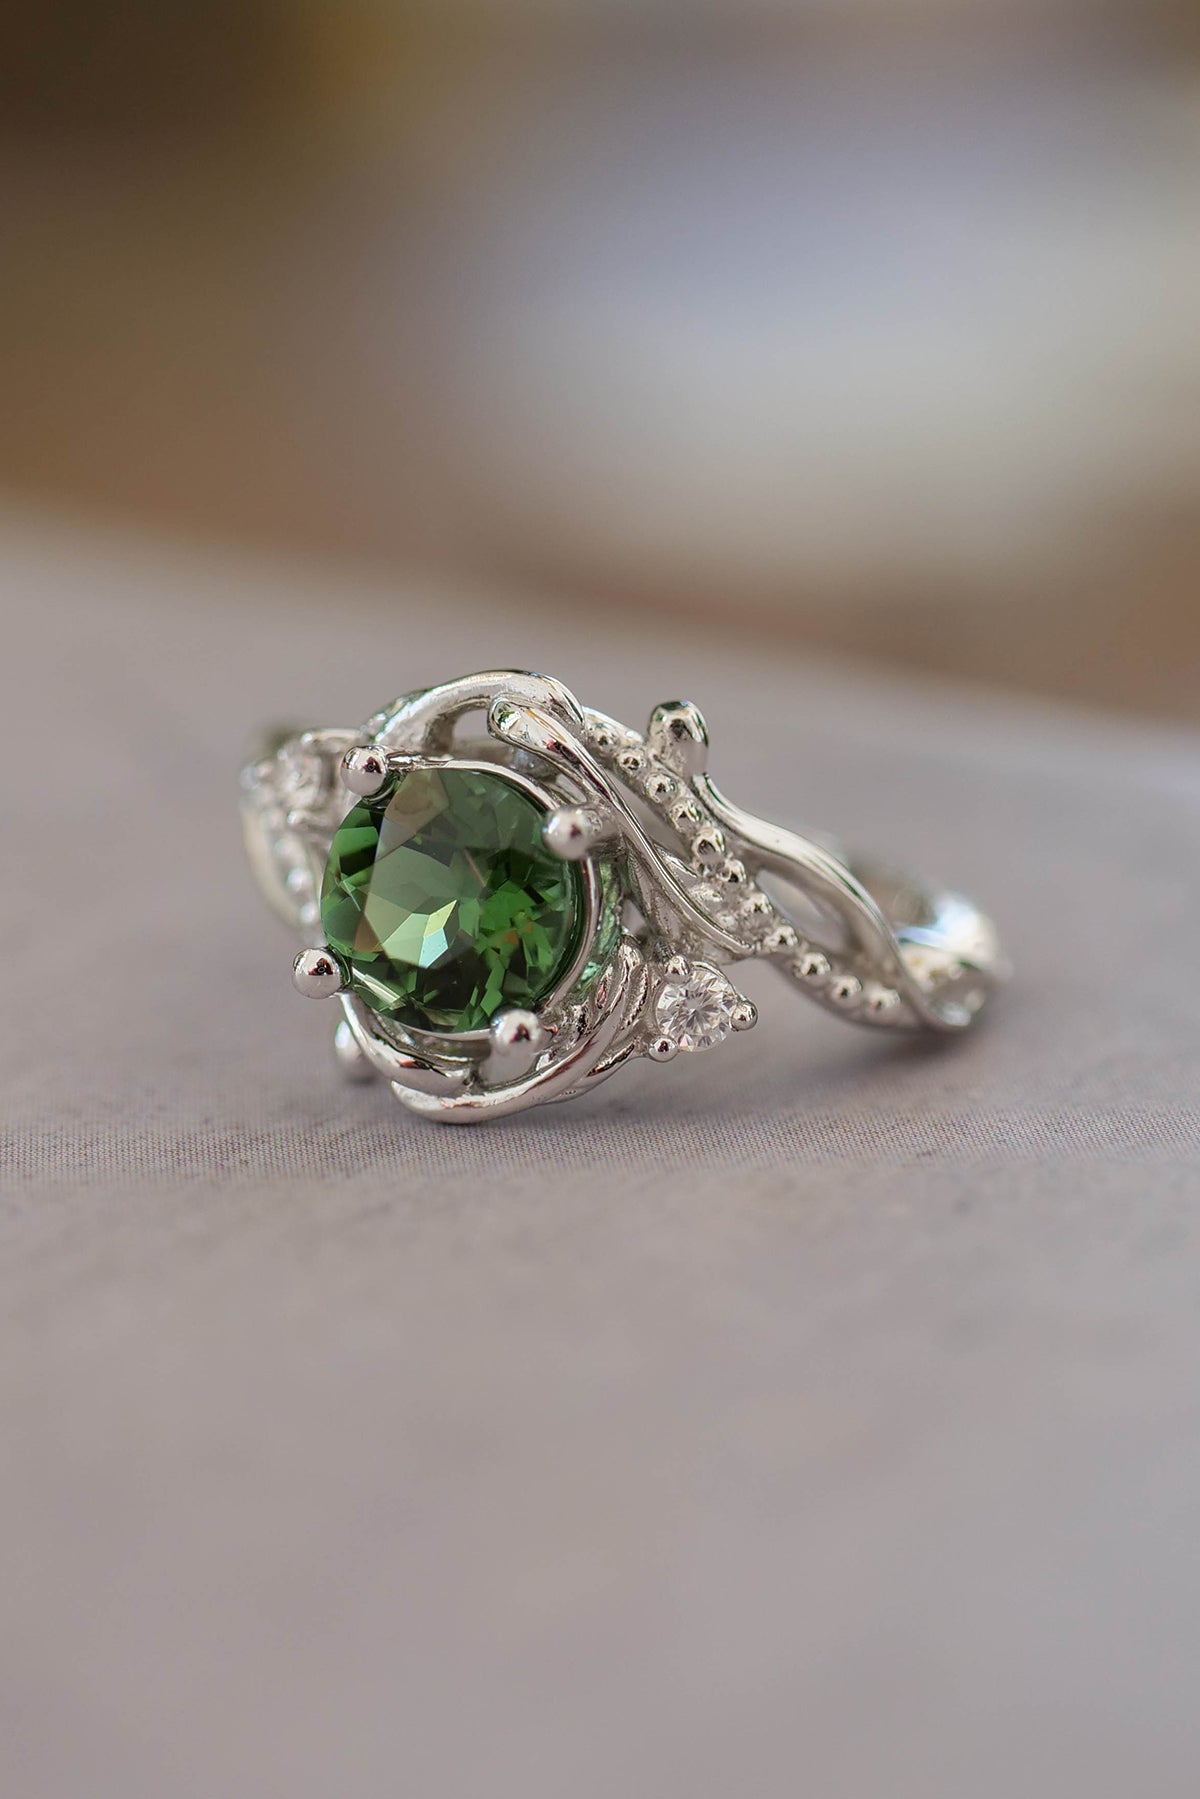 Green tourmaline ring with diamonds